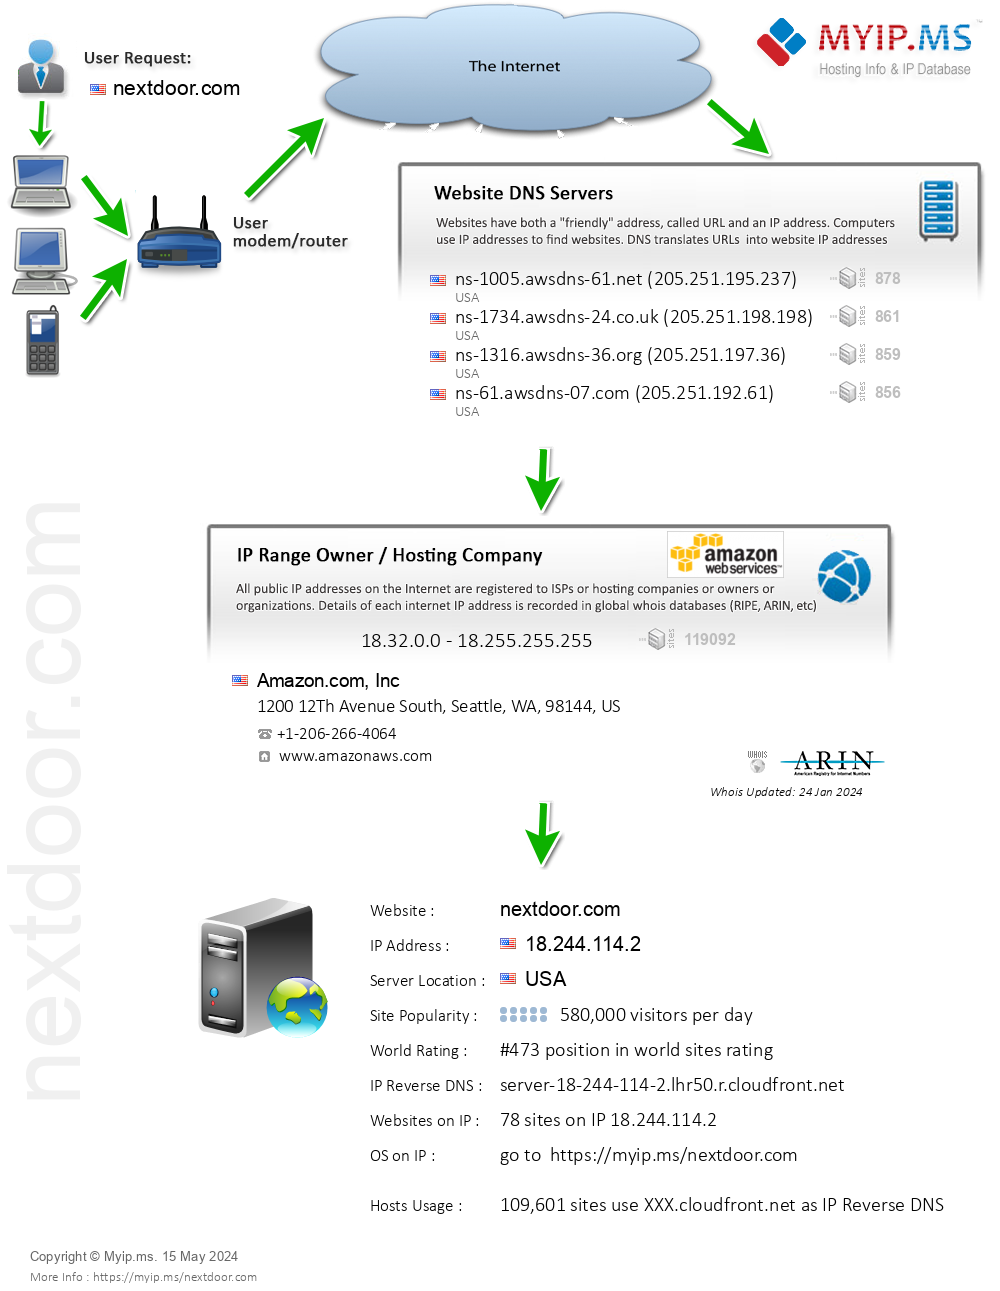 Nextdoor.com - Website Hosting Visual IP Diagram